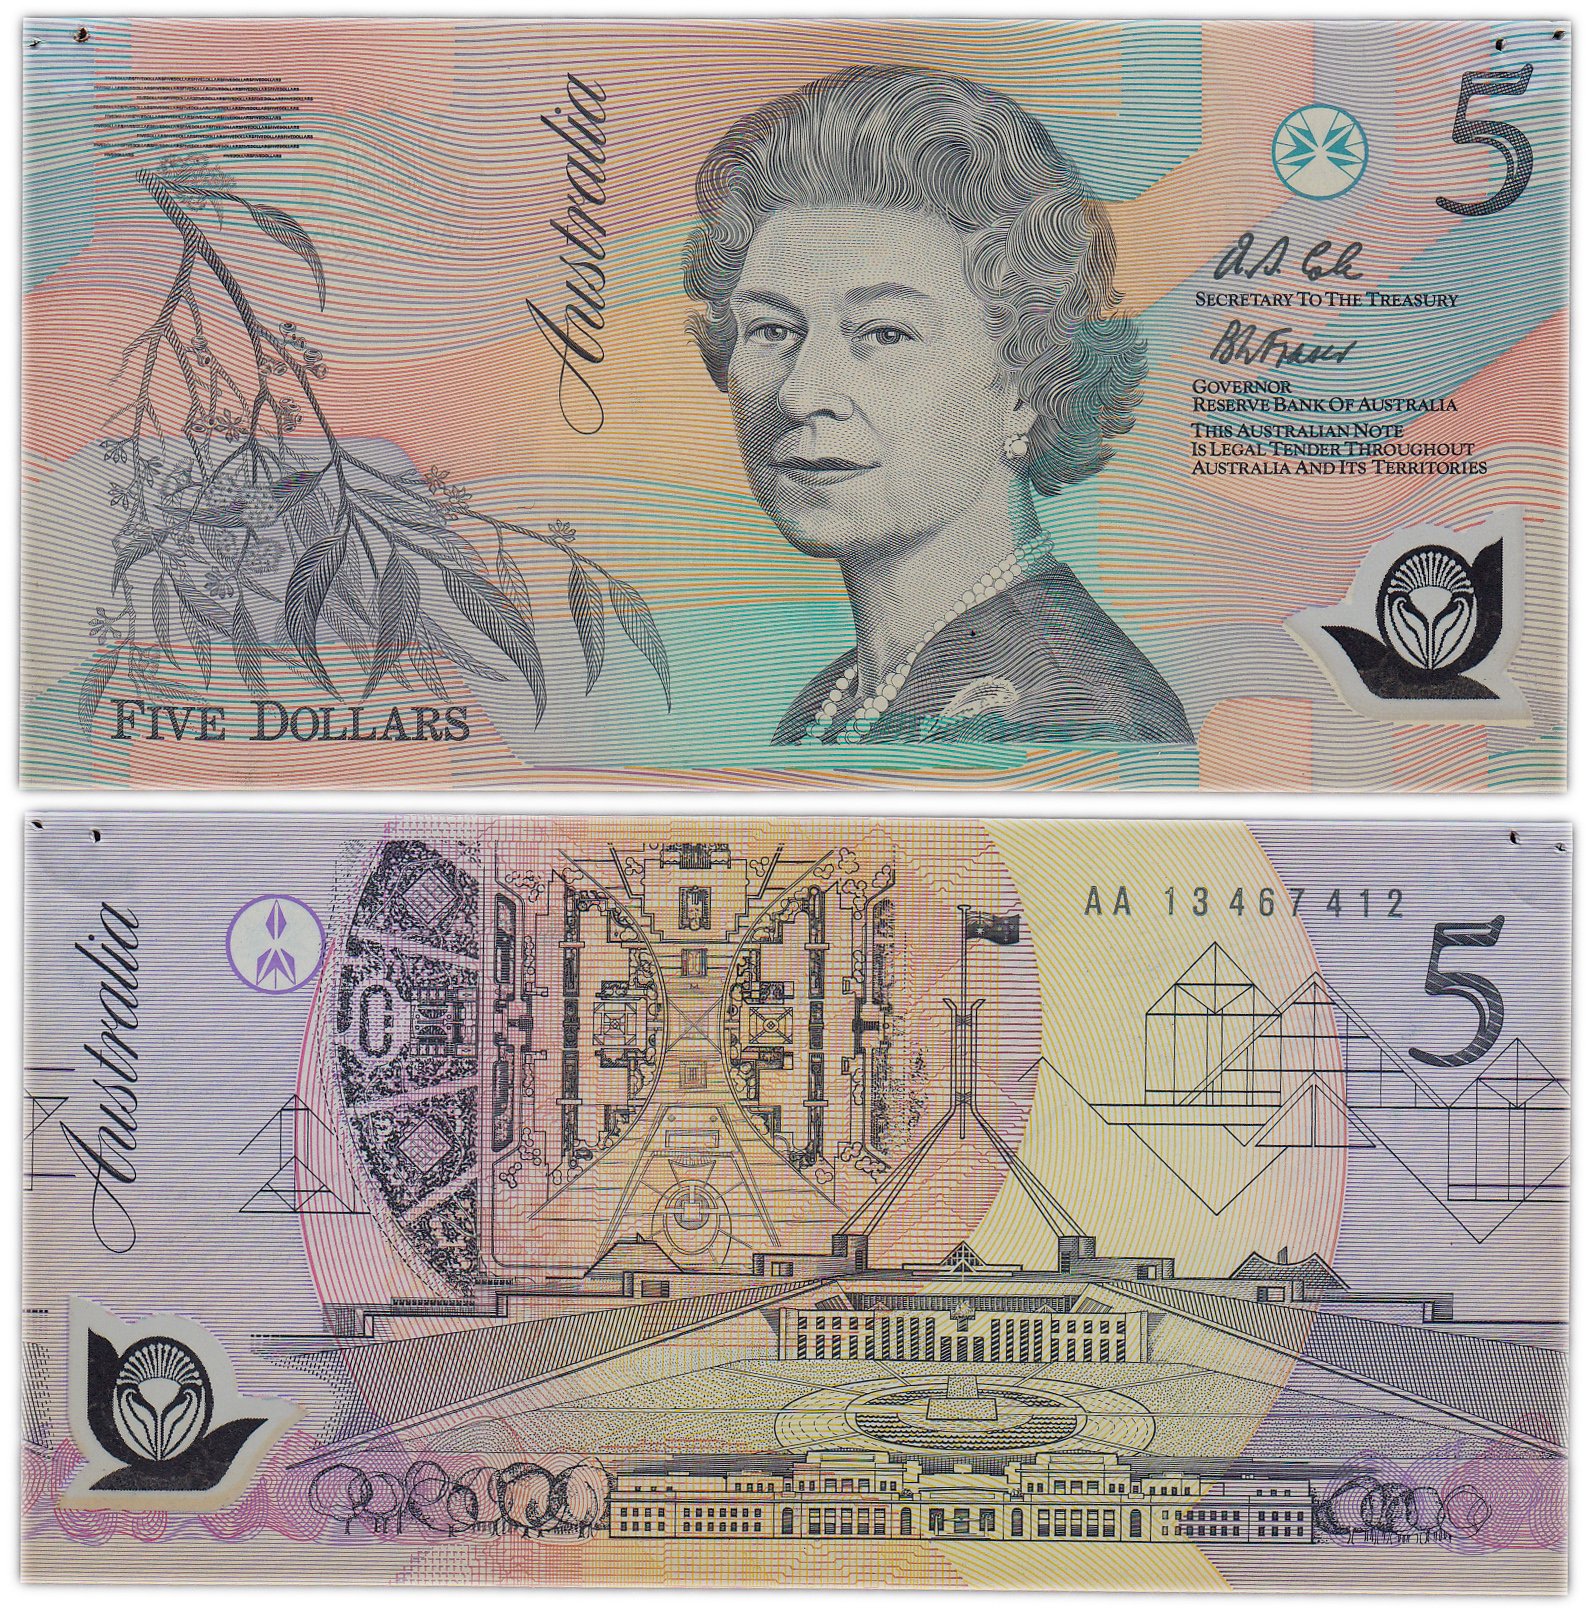 Hkd 899.00 в рублях. Австралийские купюры. Австралийский доллар. Валюта Австралии. Денежные купюры Австралии.